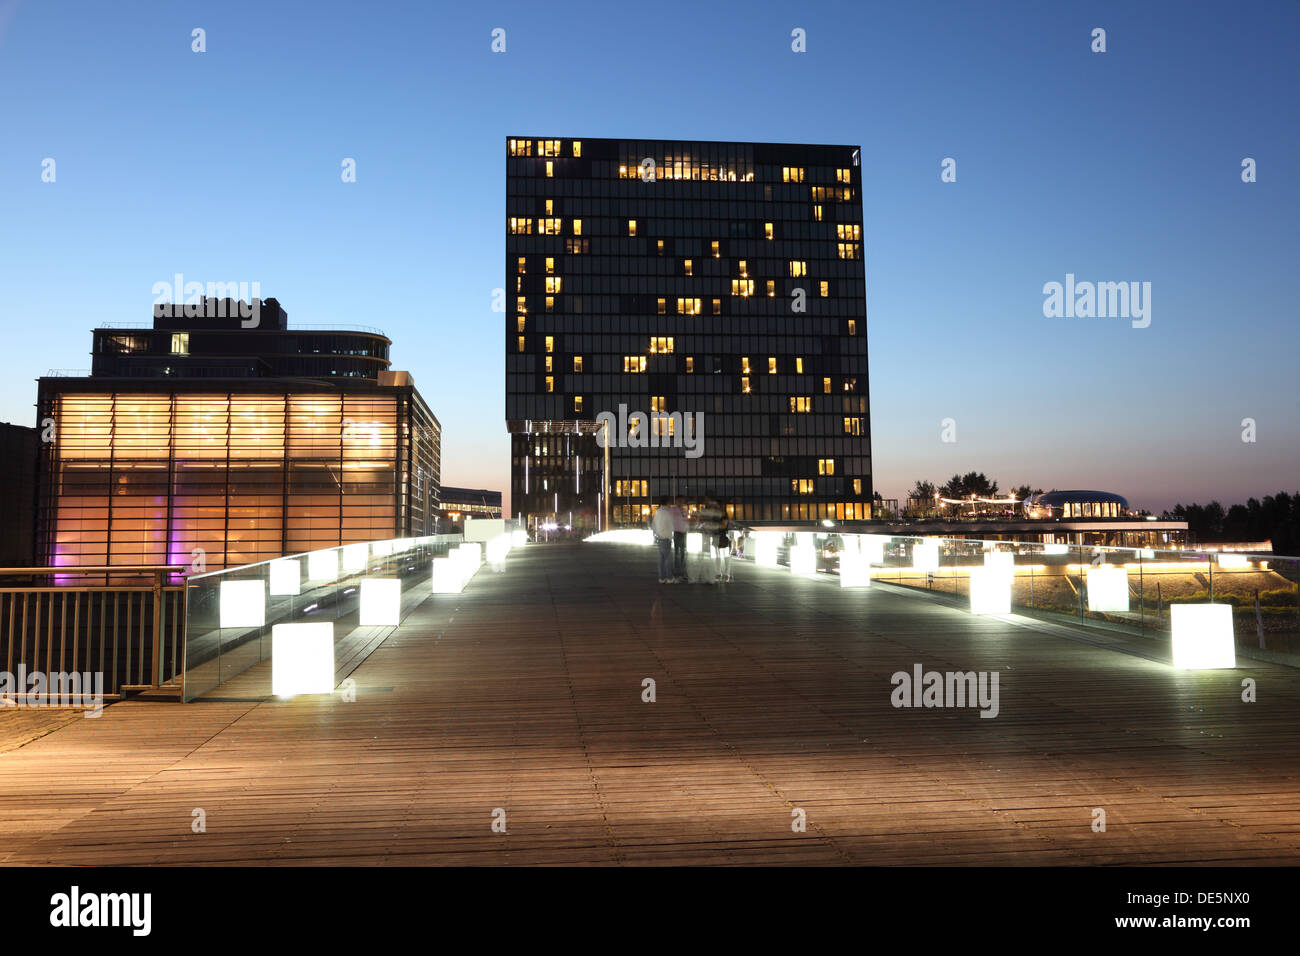 Night view of the Dusseldorf Media Harbor (Medienhafen) in Germany Stock Photo